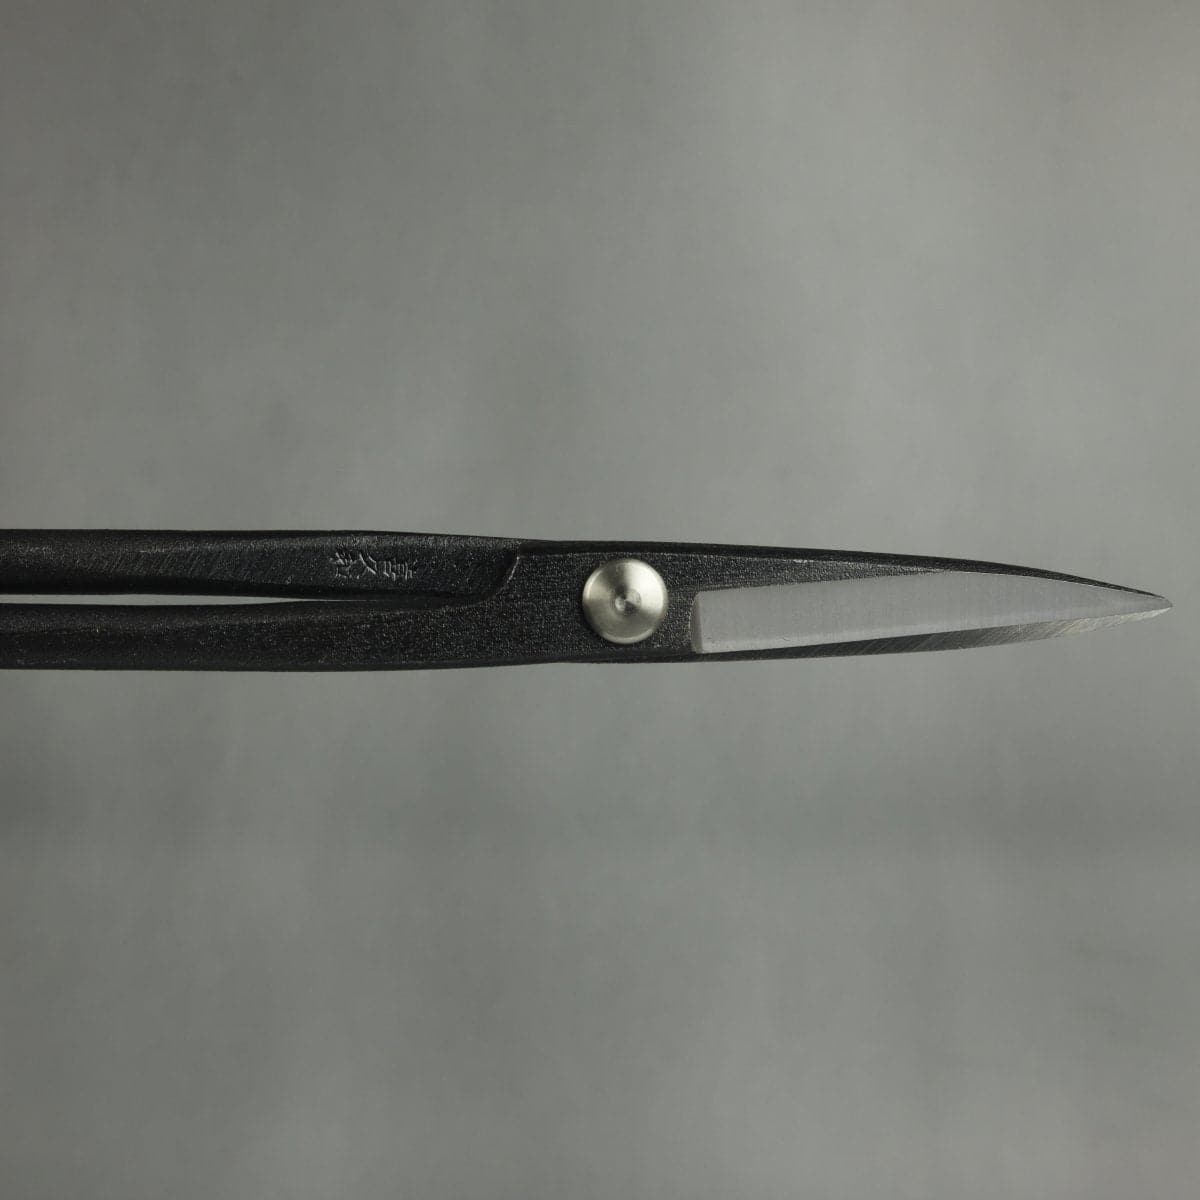 Craftsman Professional Bonsai Scissors closed blades